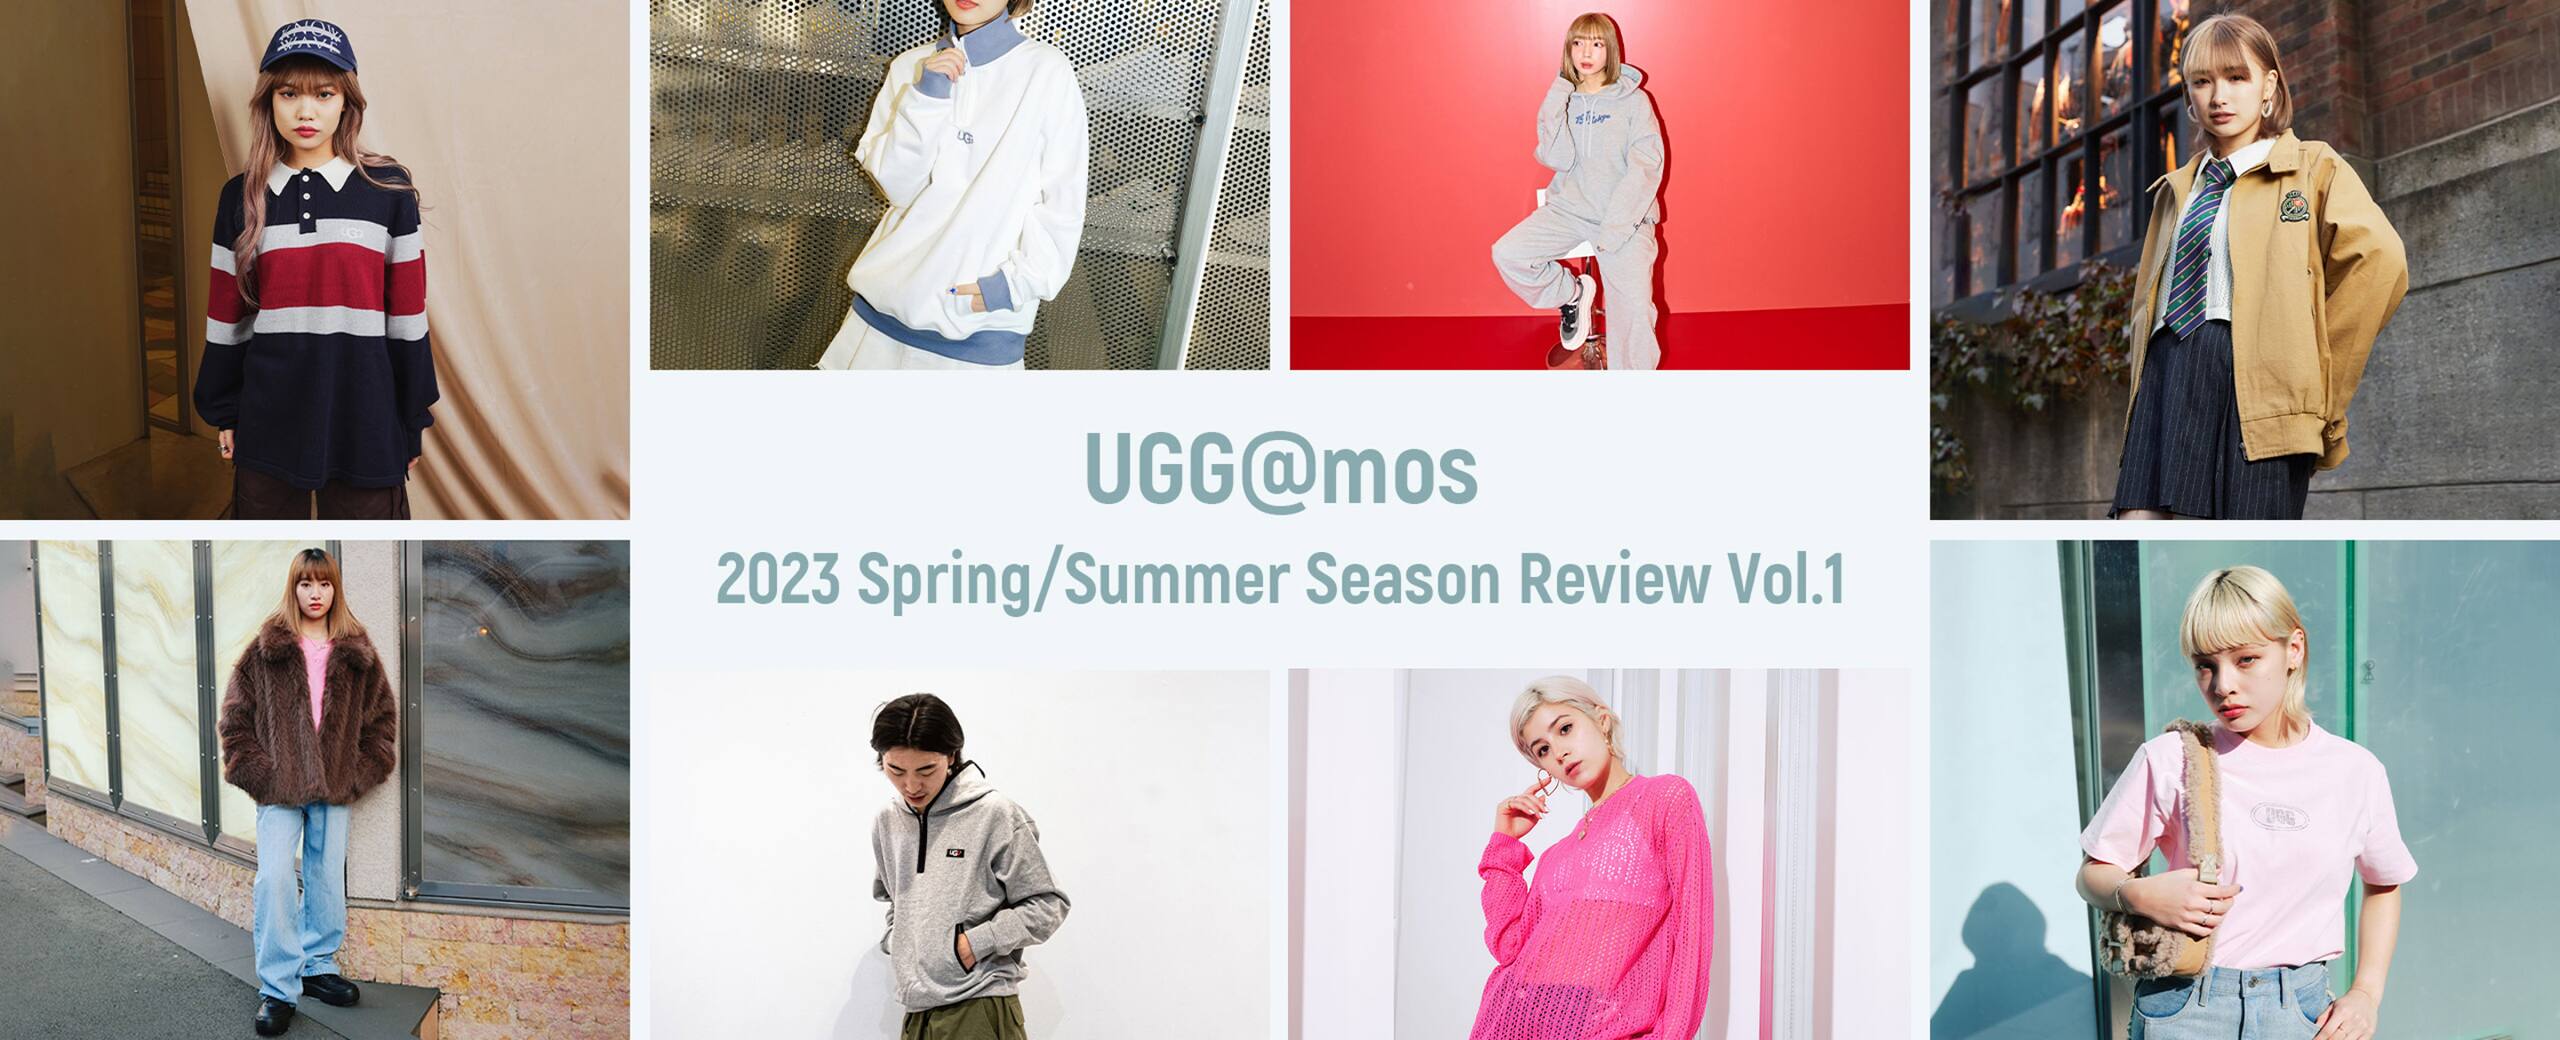 ugg@mos 2023 SS Season Review Vol.1